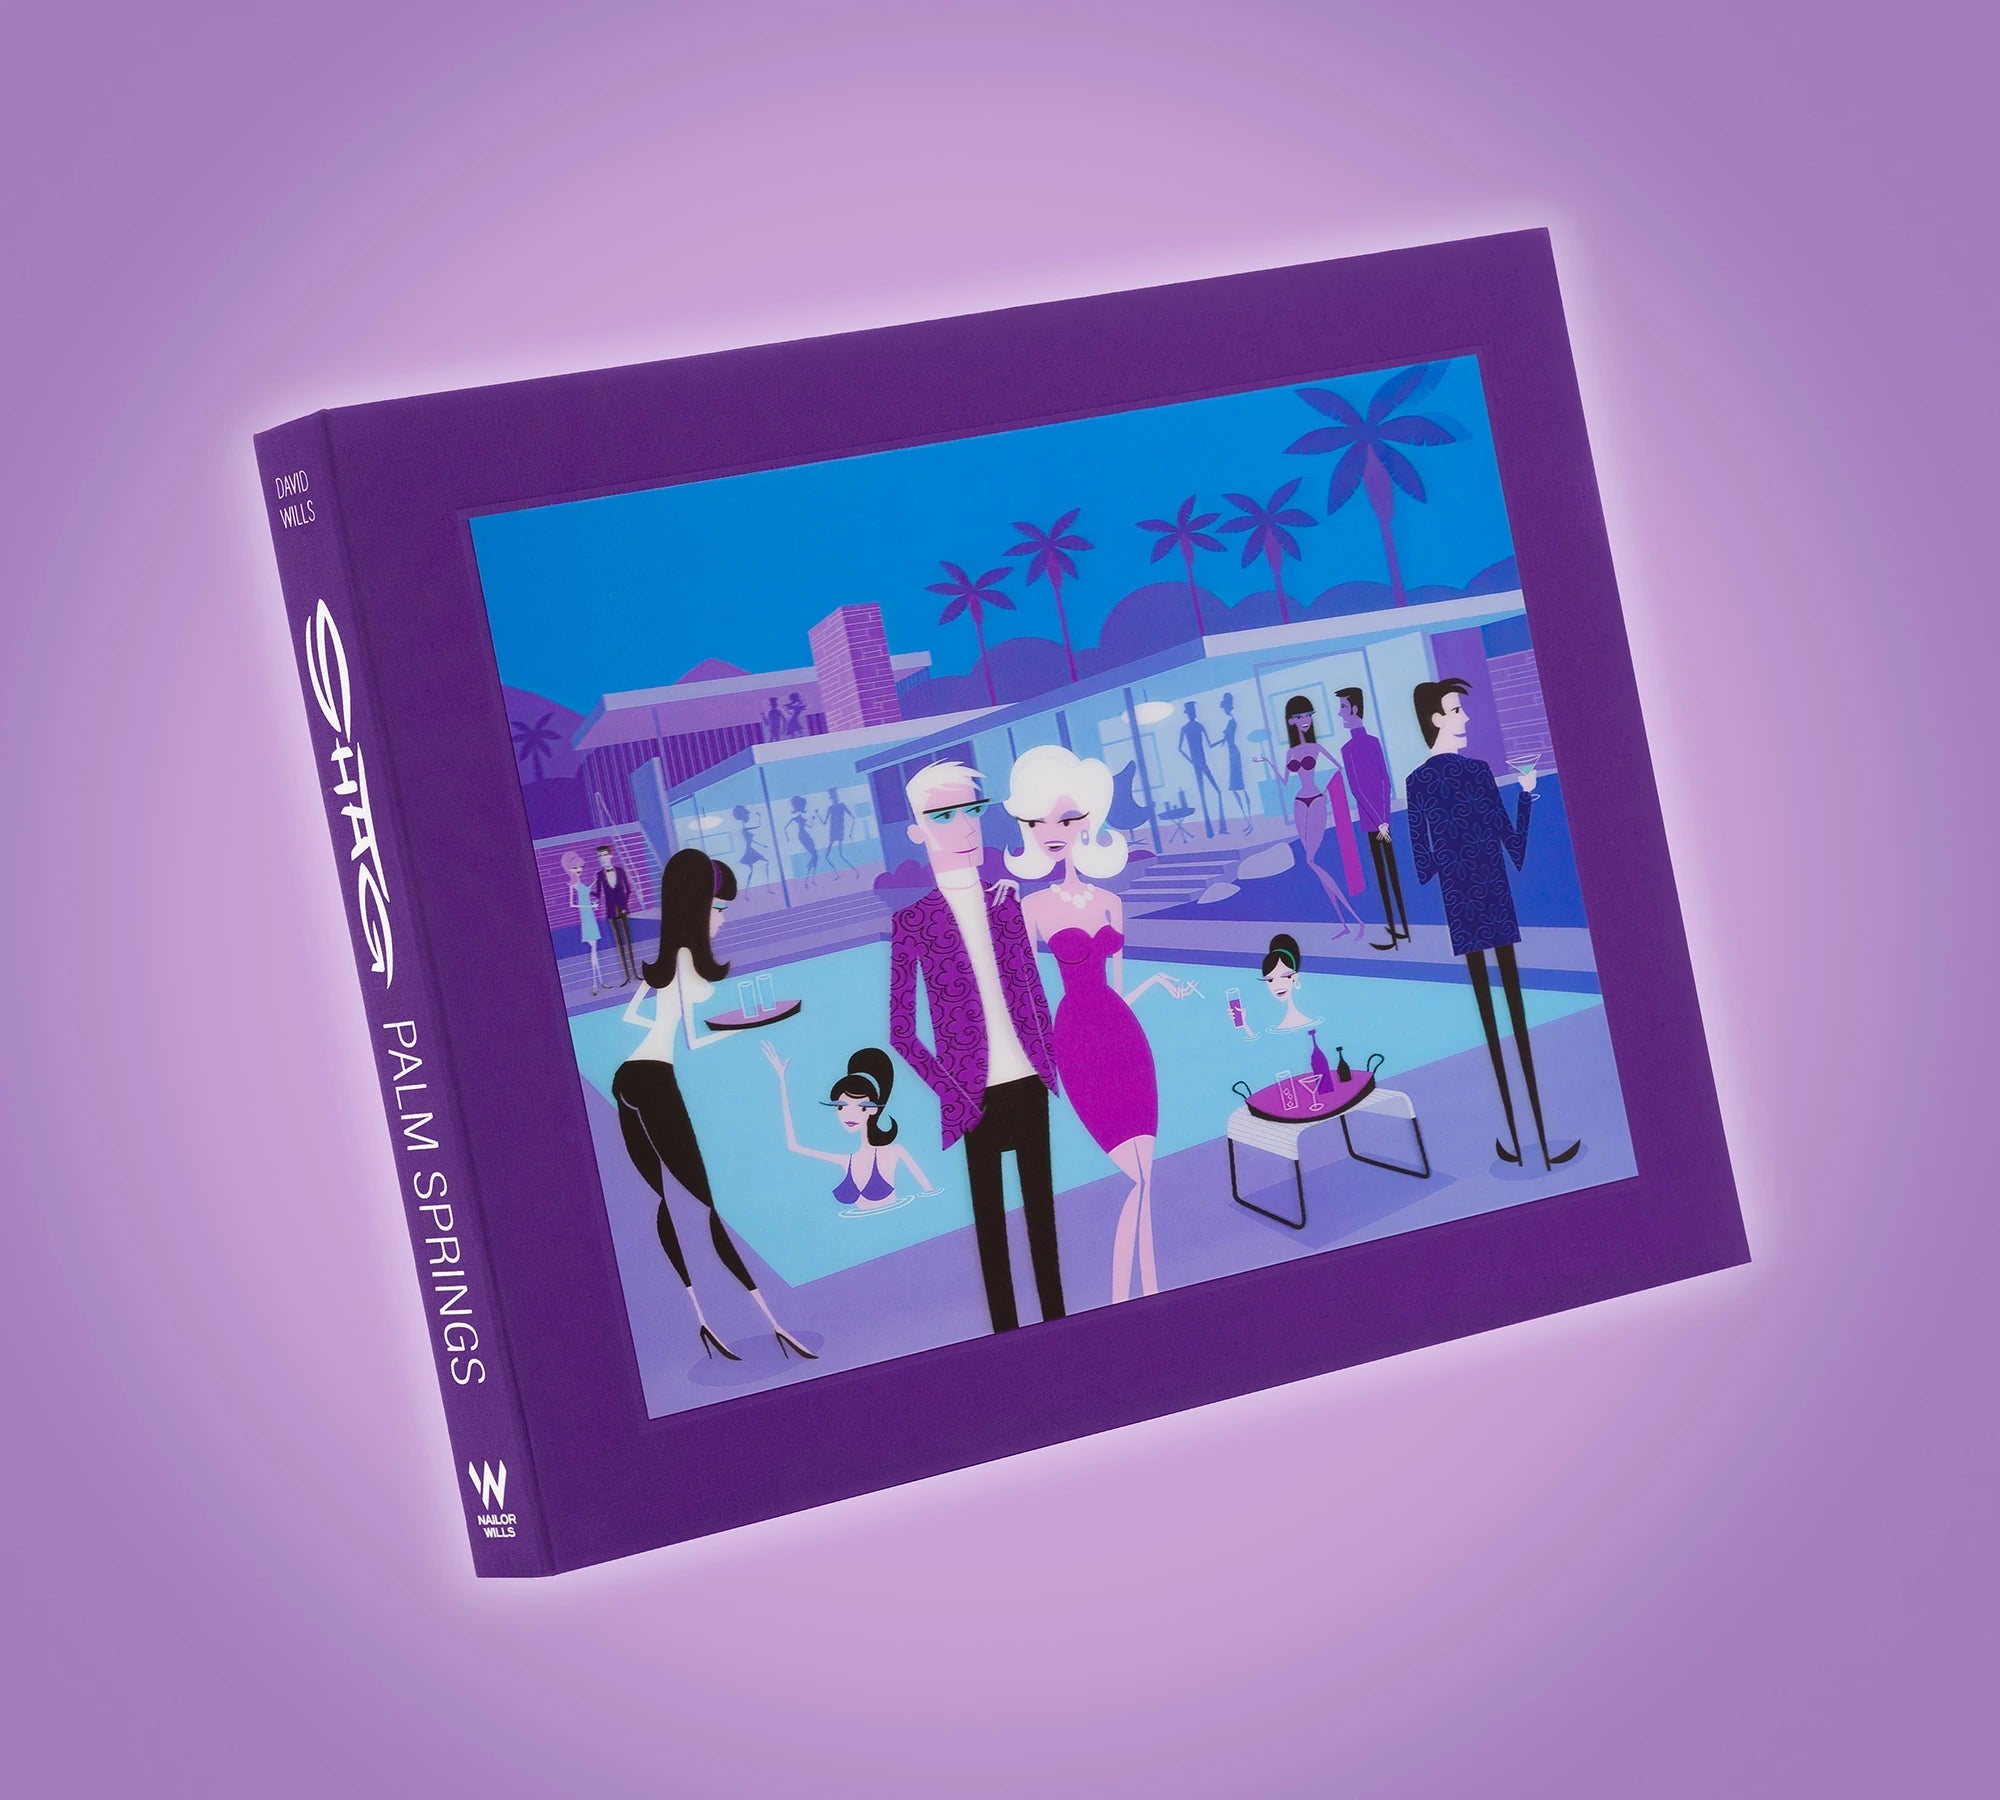 SHAG PALM SPRINGS Luxury Edition Purple - Destination PSP